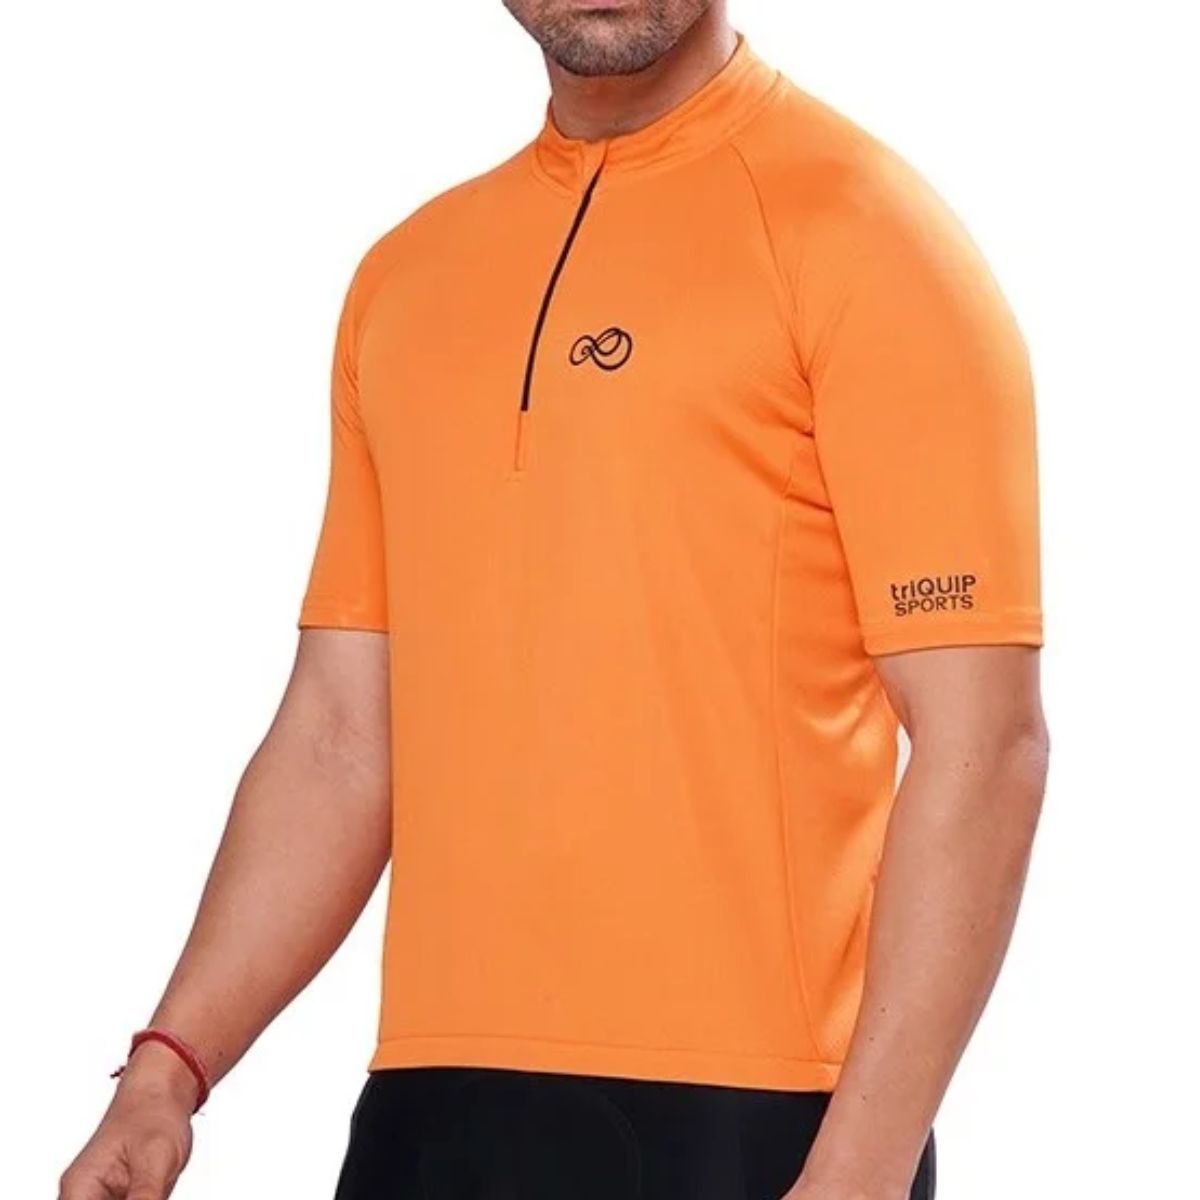 Mens Basic Cycling Jersey - Half Sleeves - Orange 1